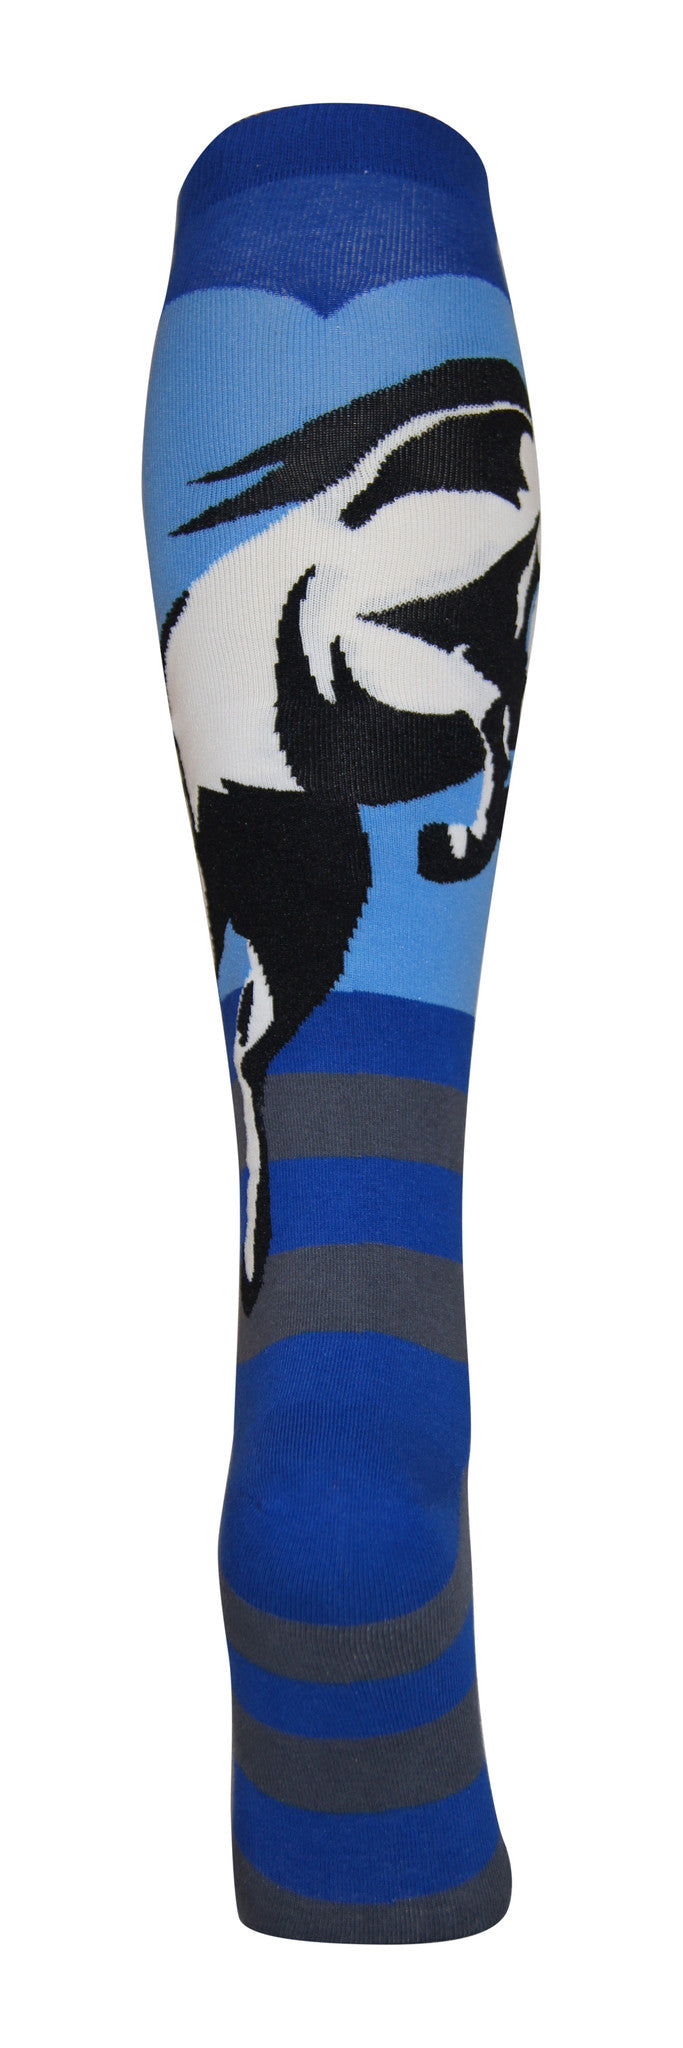 "Striped Jumper" cotton-rich knee sock from lucky7socks.com